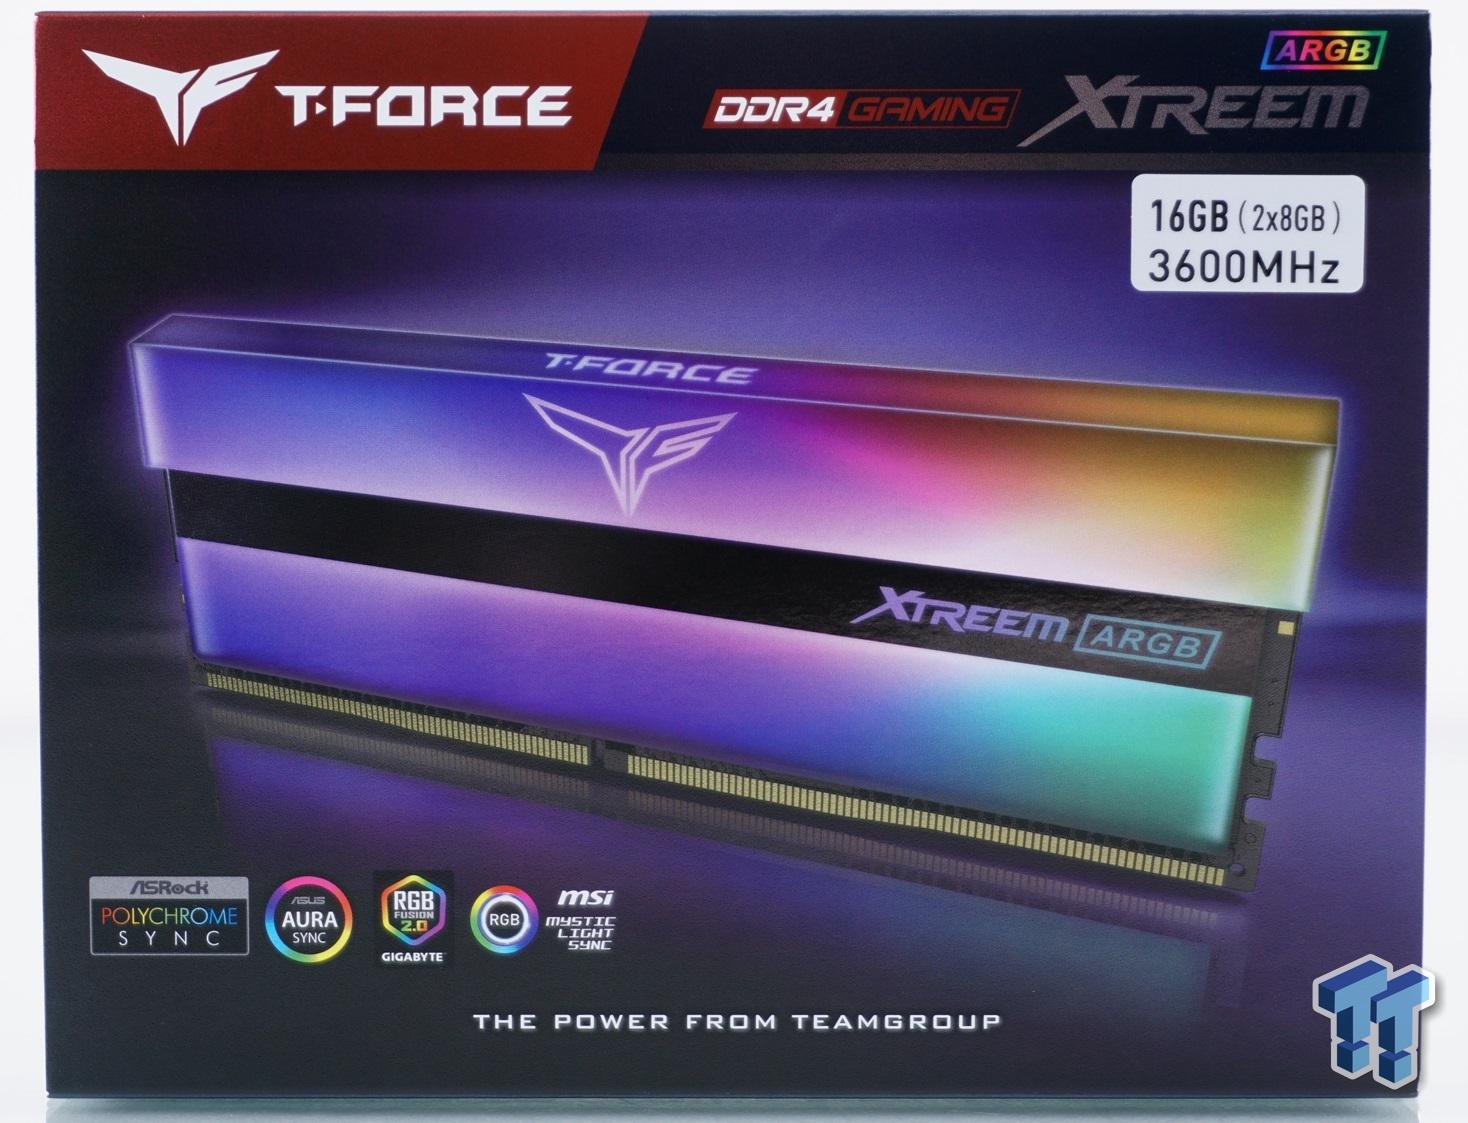 TEAM T-Force XTREEM ARGB DDR4-3600 16GB Dual-Channel Memory Kit Review